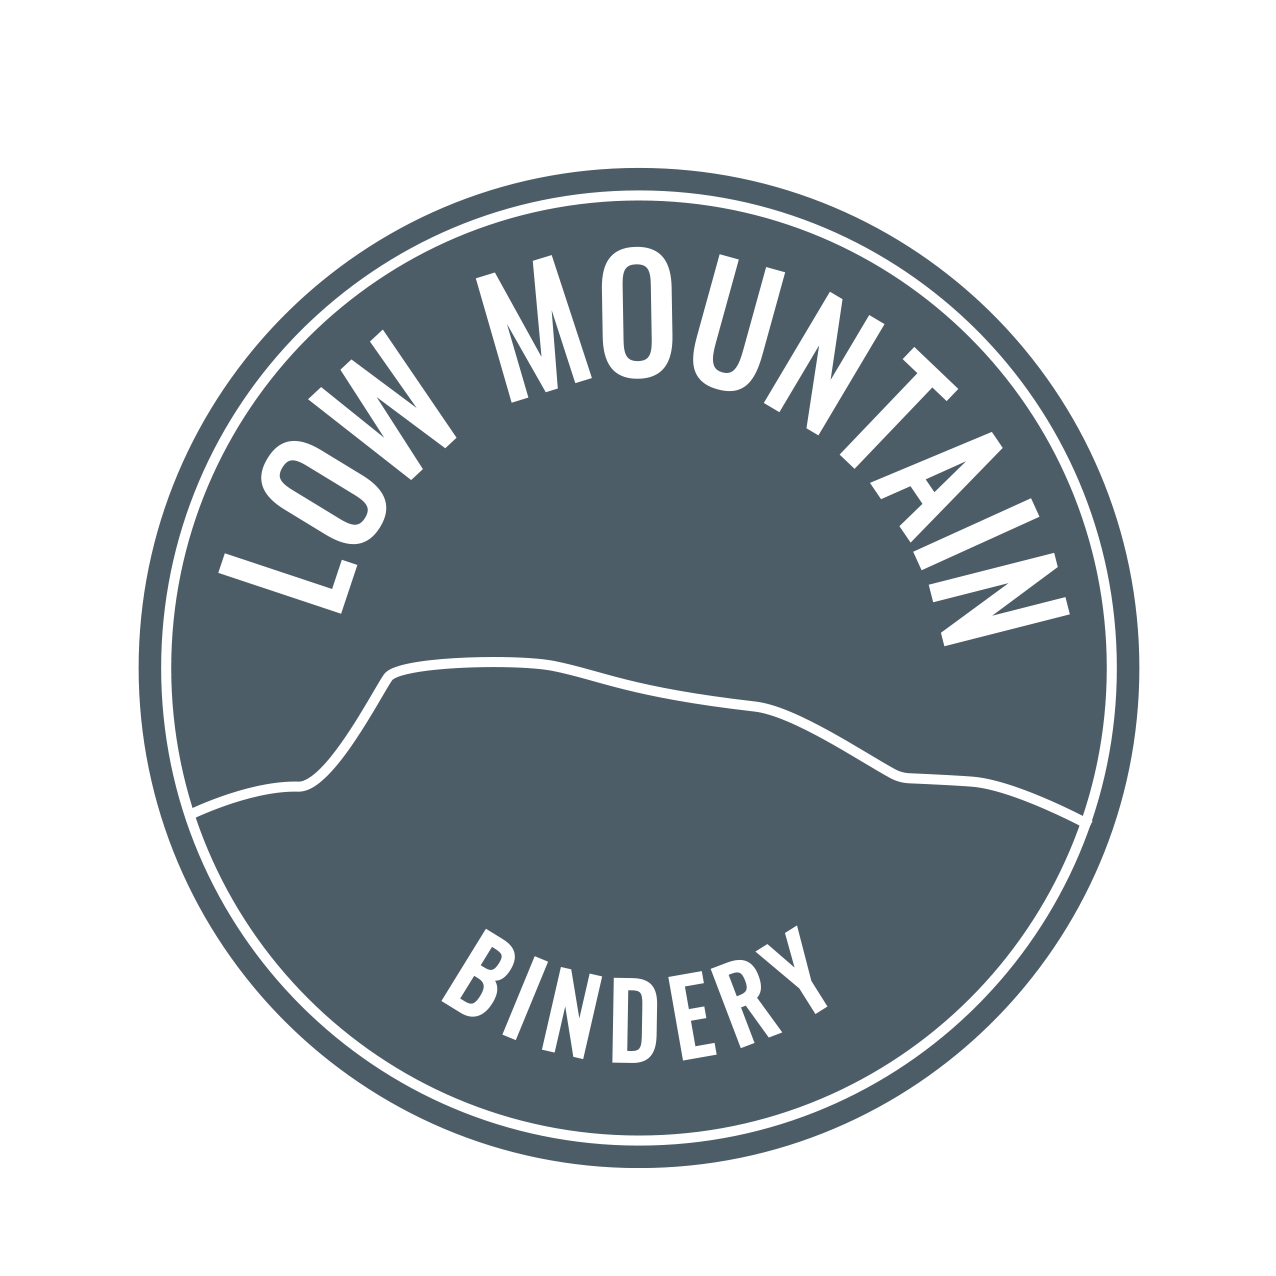 Low Mountaint Bindery logo